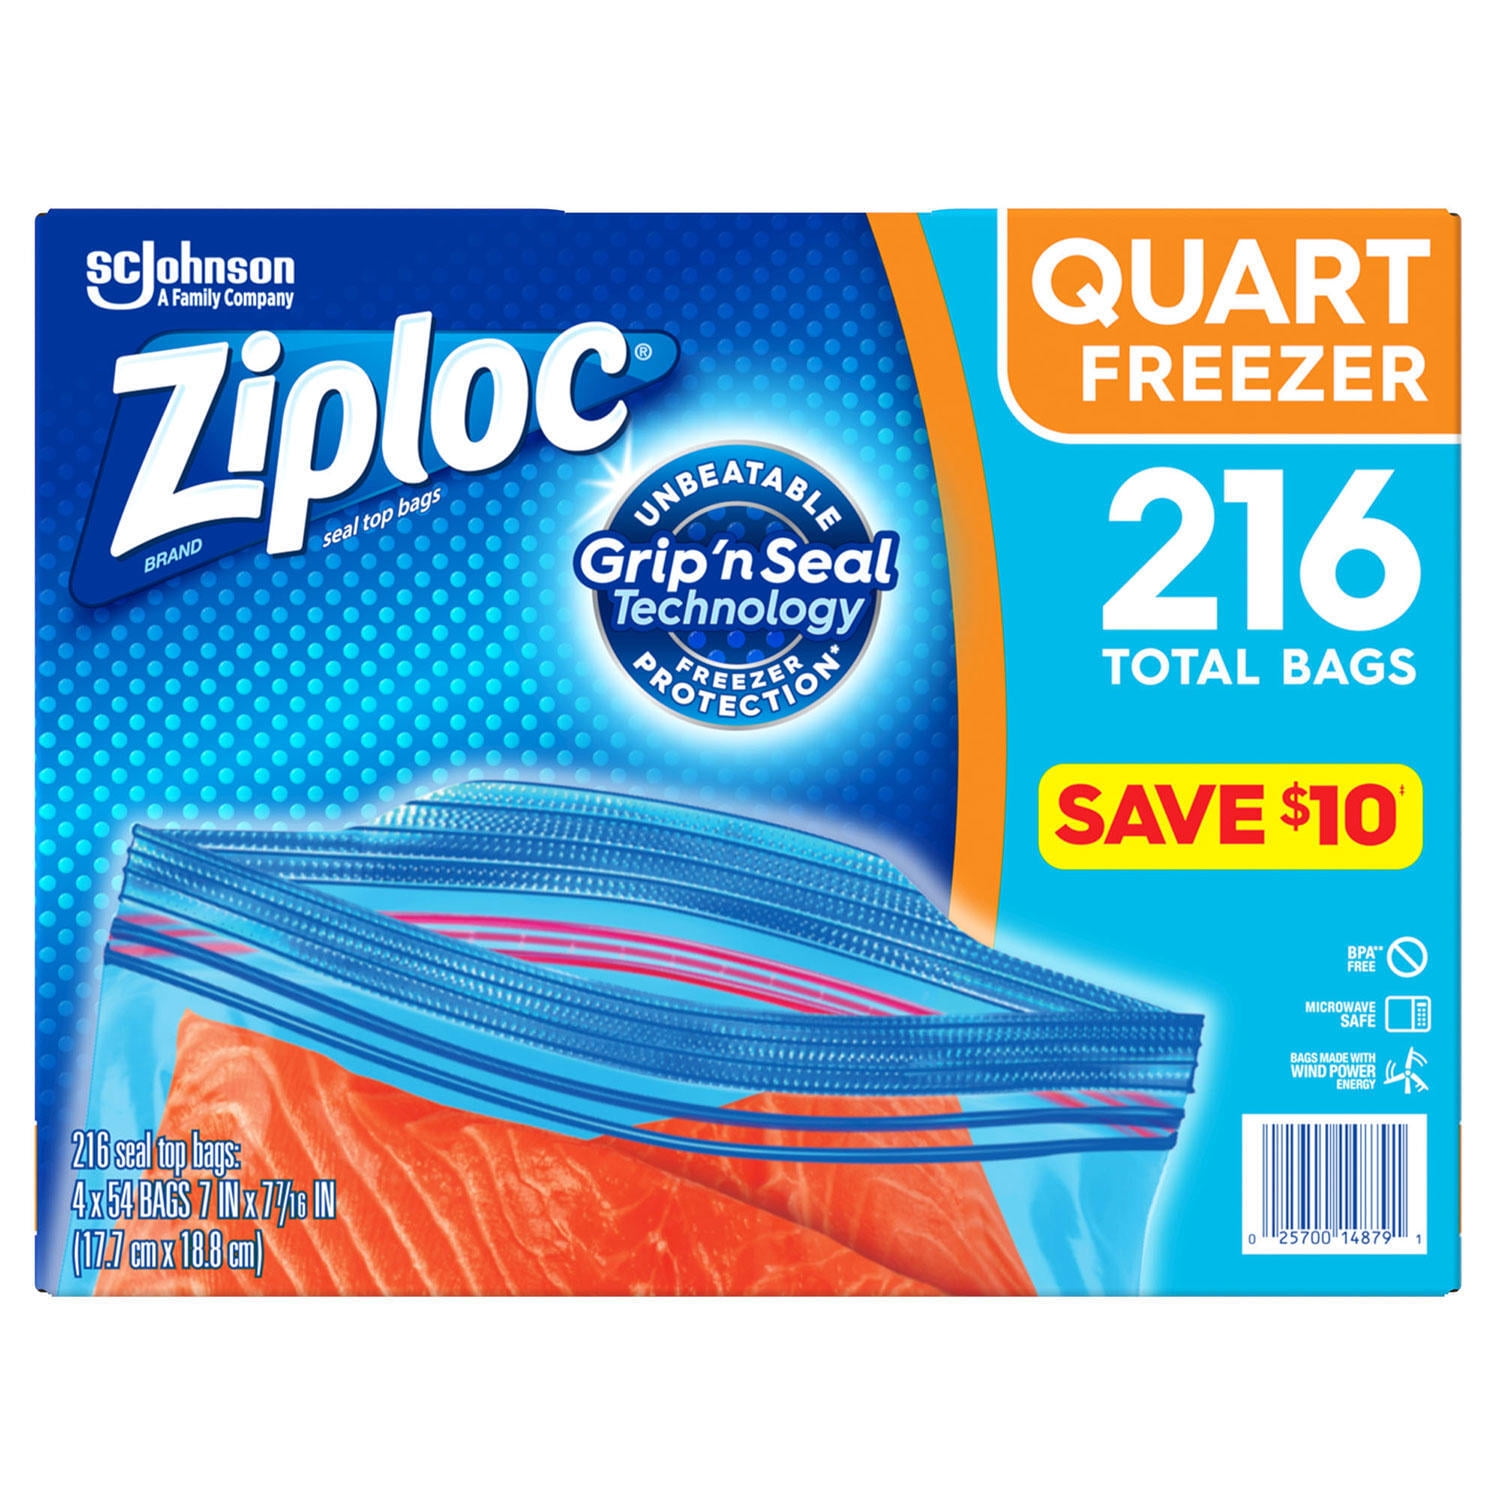 Ziploc® Quart Freezer Bags with Stay Open Design, 38 ct - Fry's